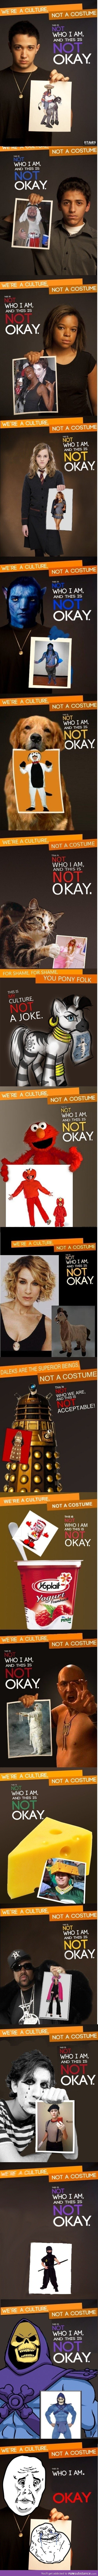 We're a culture not a costume